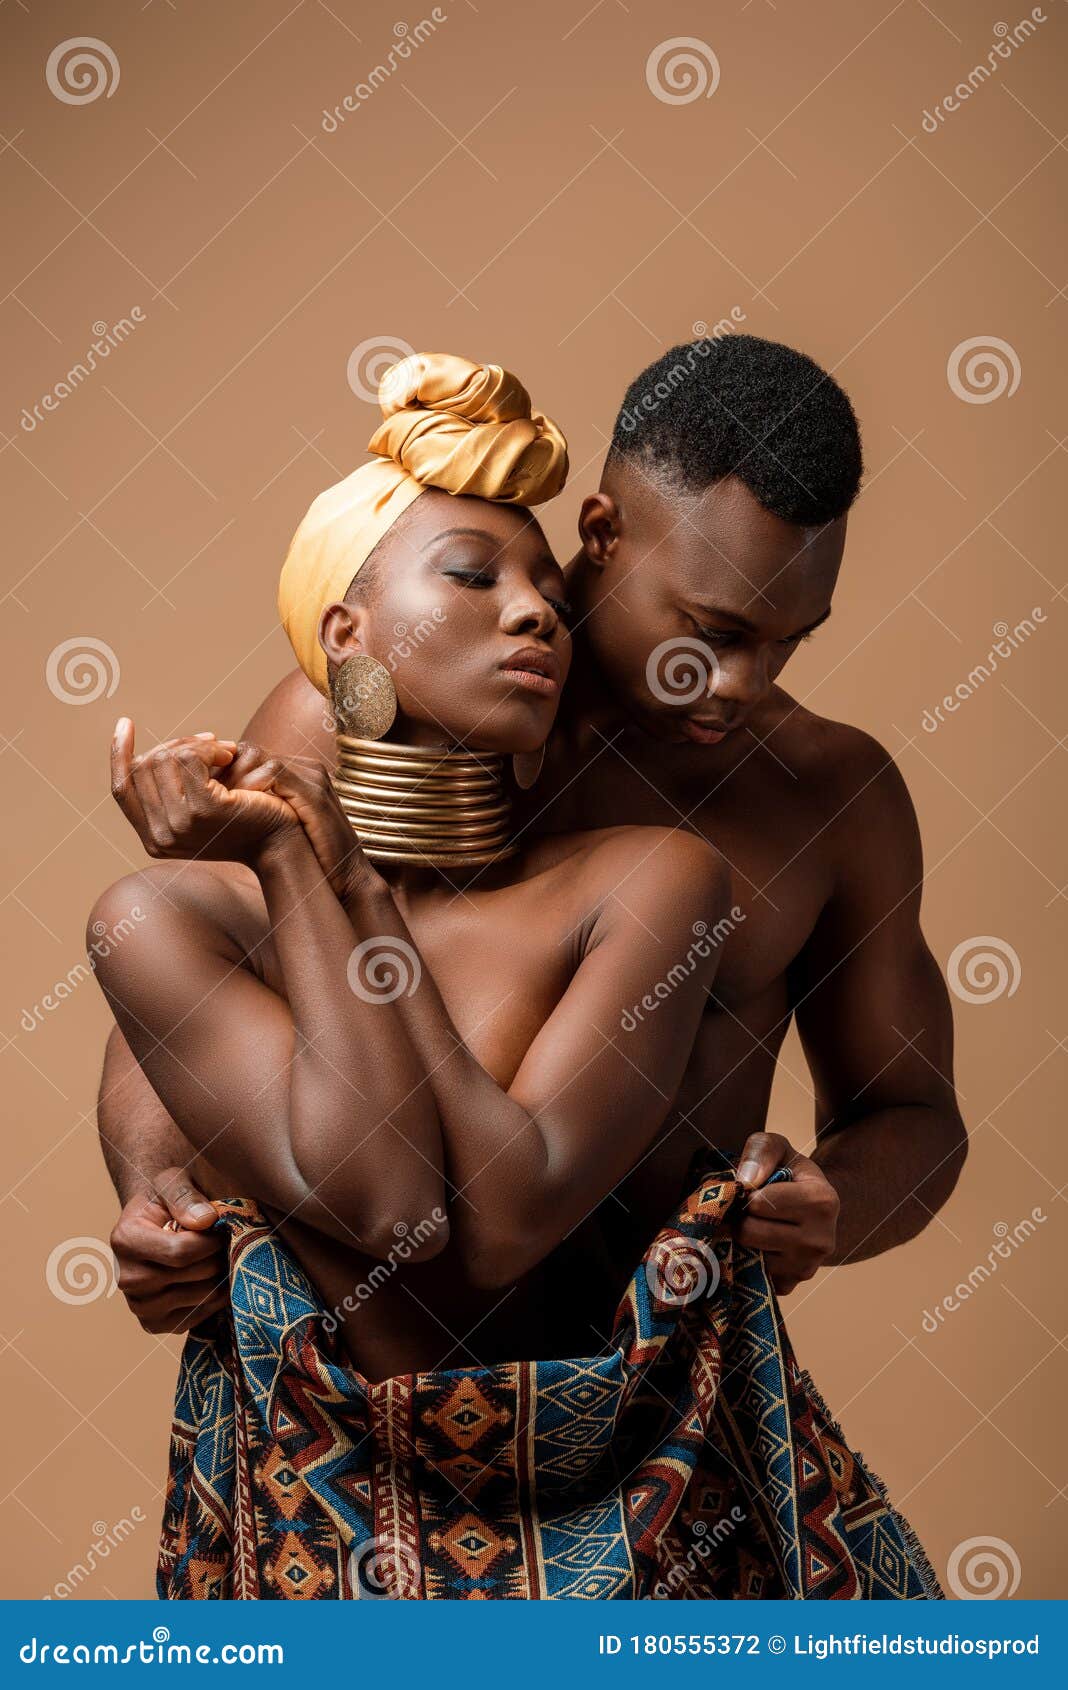 girl tribe african tribal naked